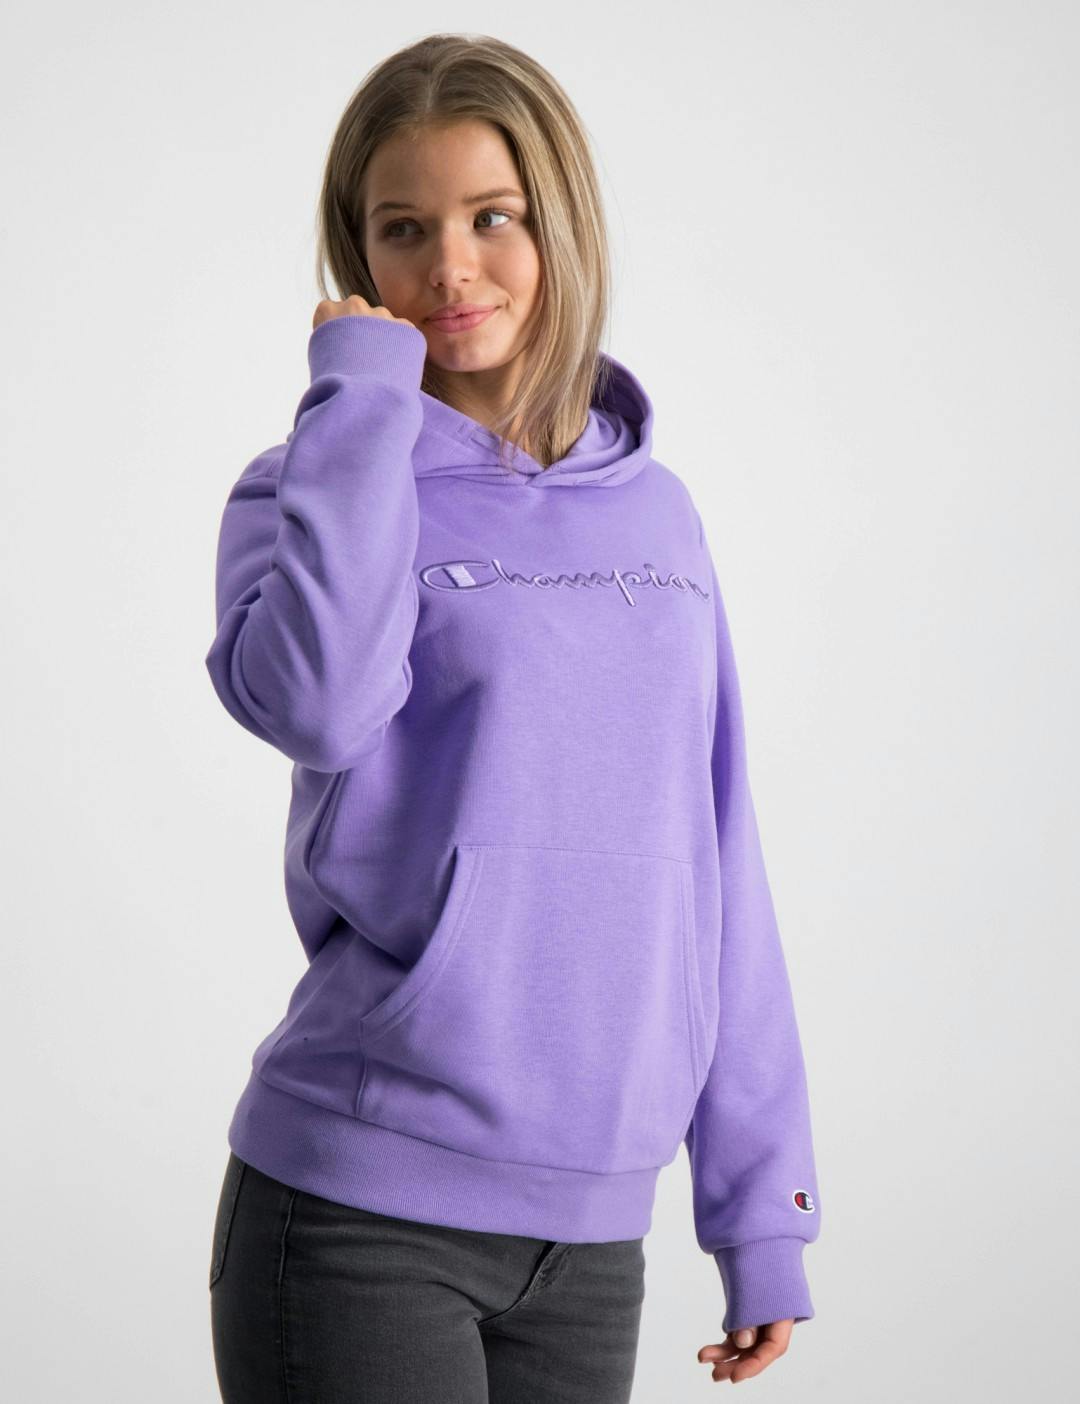 Produktivitet ål Glimte Lilla Hooded Sweatshirt til Pige | Kids Brand Store